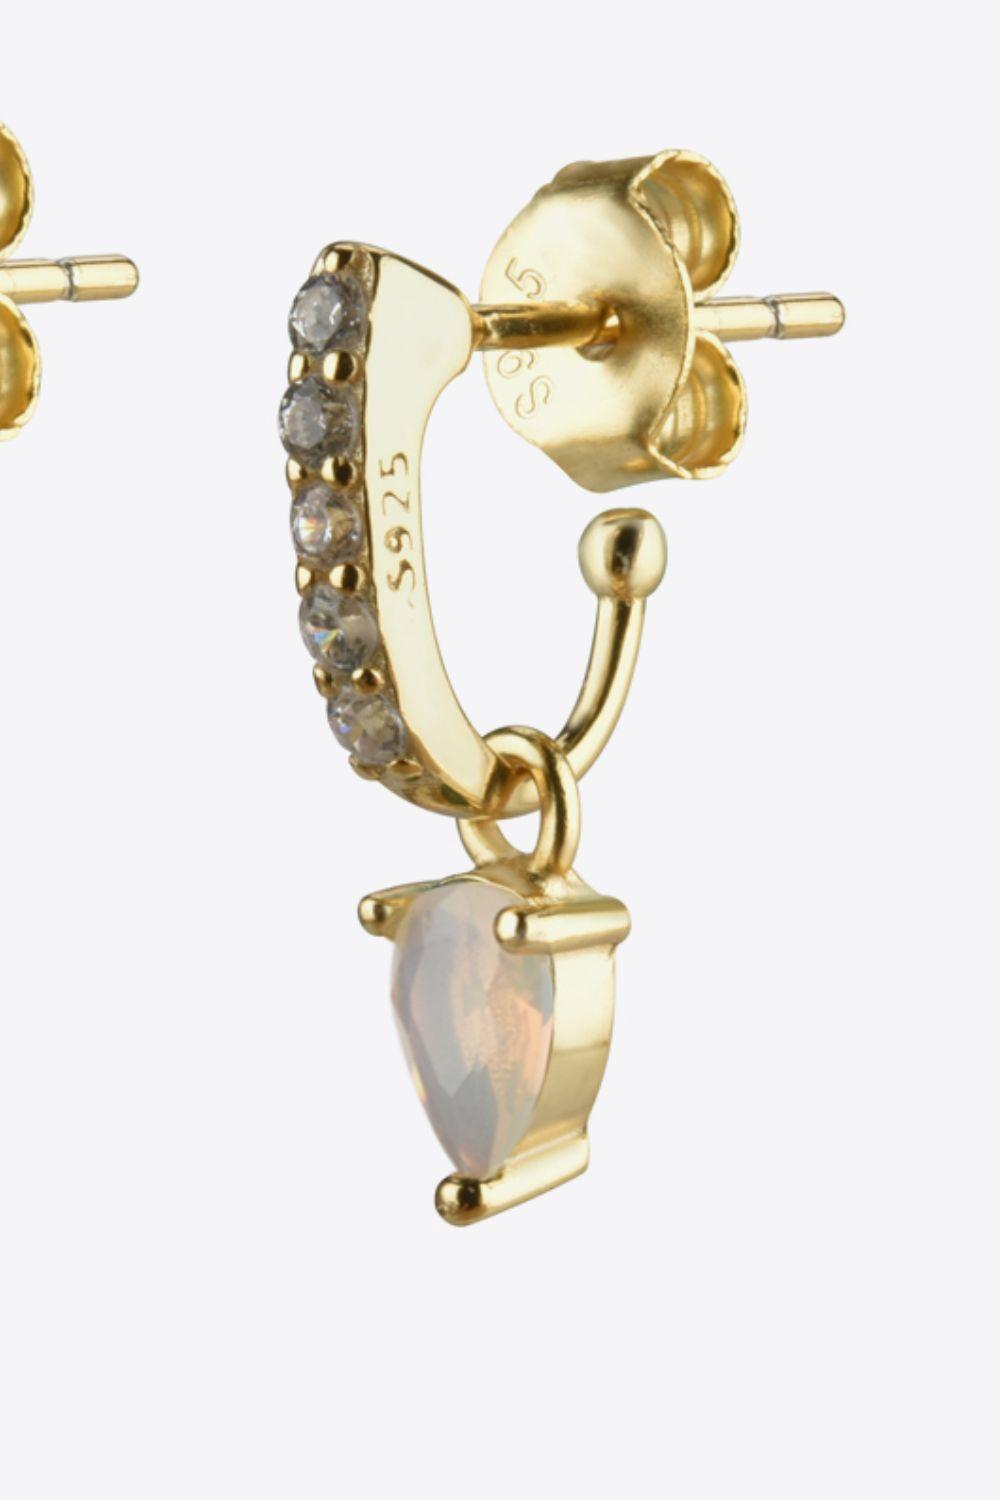 Opal 925 Sterling Silver Drop Earrings - Crazy Like a Daisy Boutique